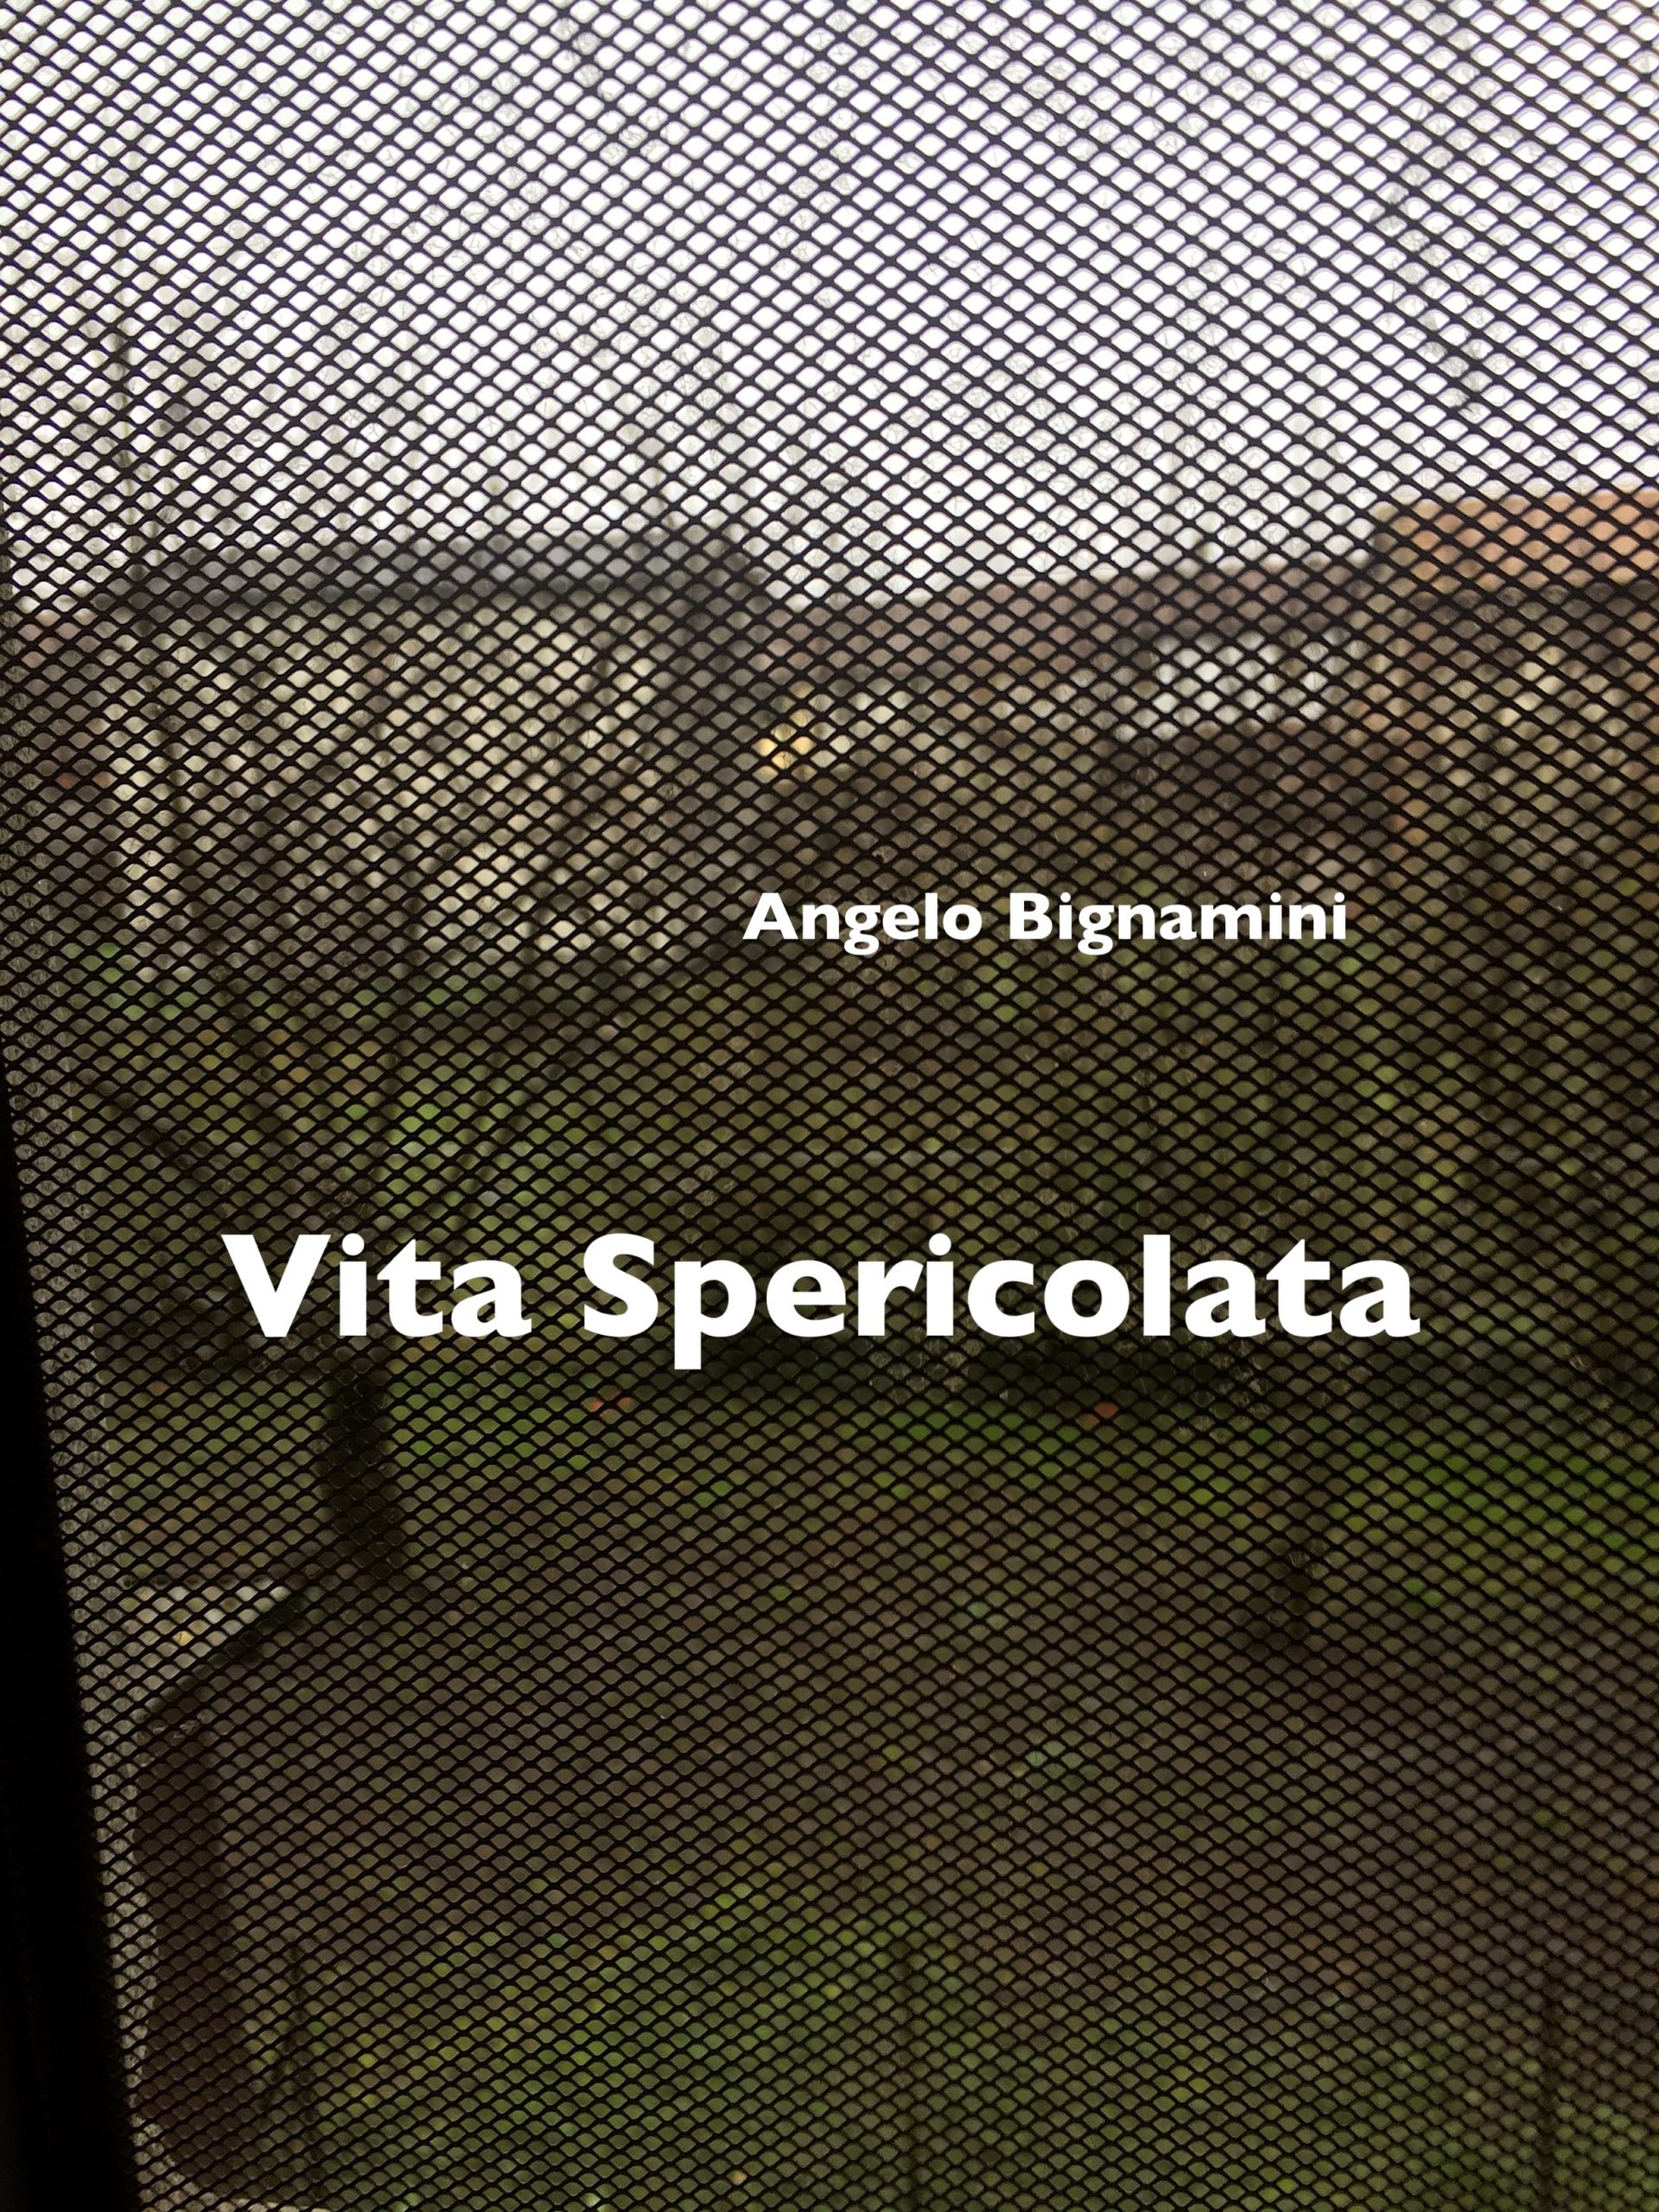 Angelo Bignamini – Vita spericolata